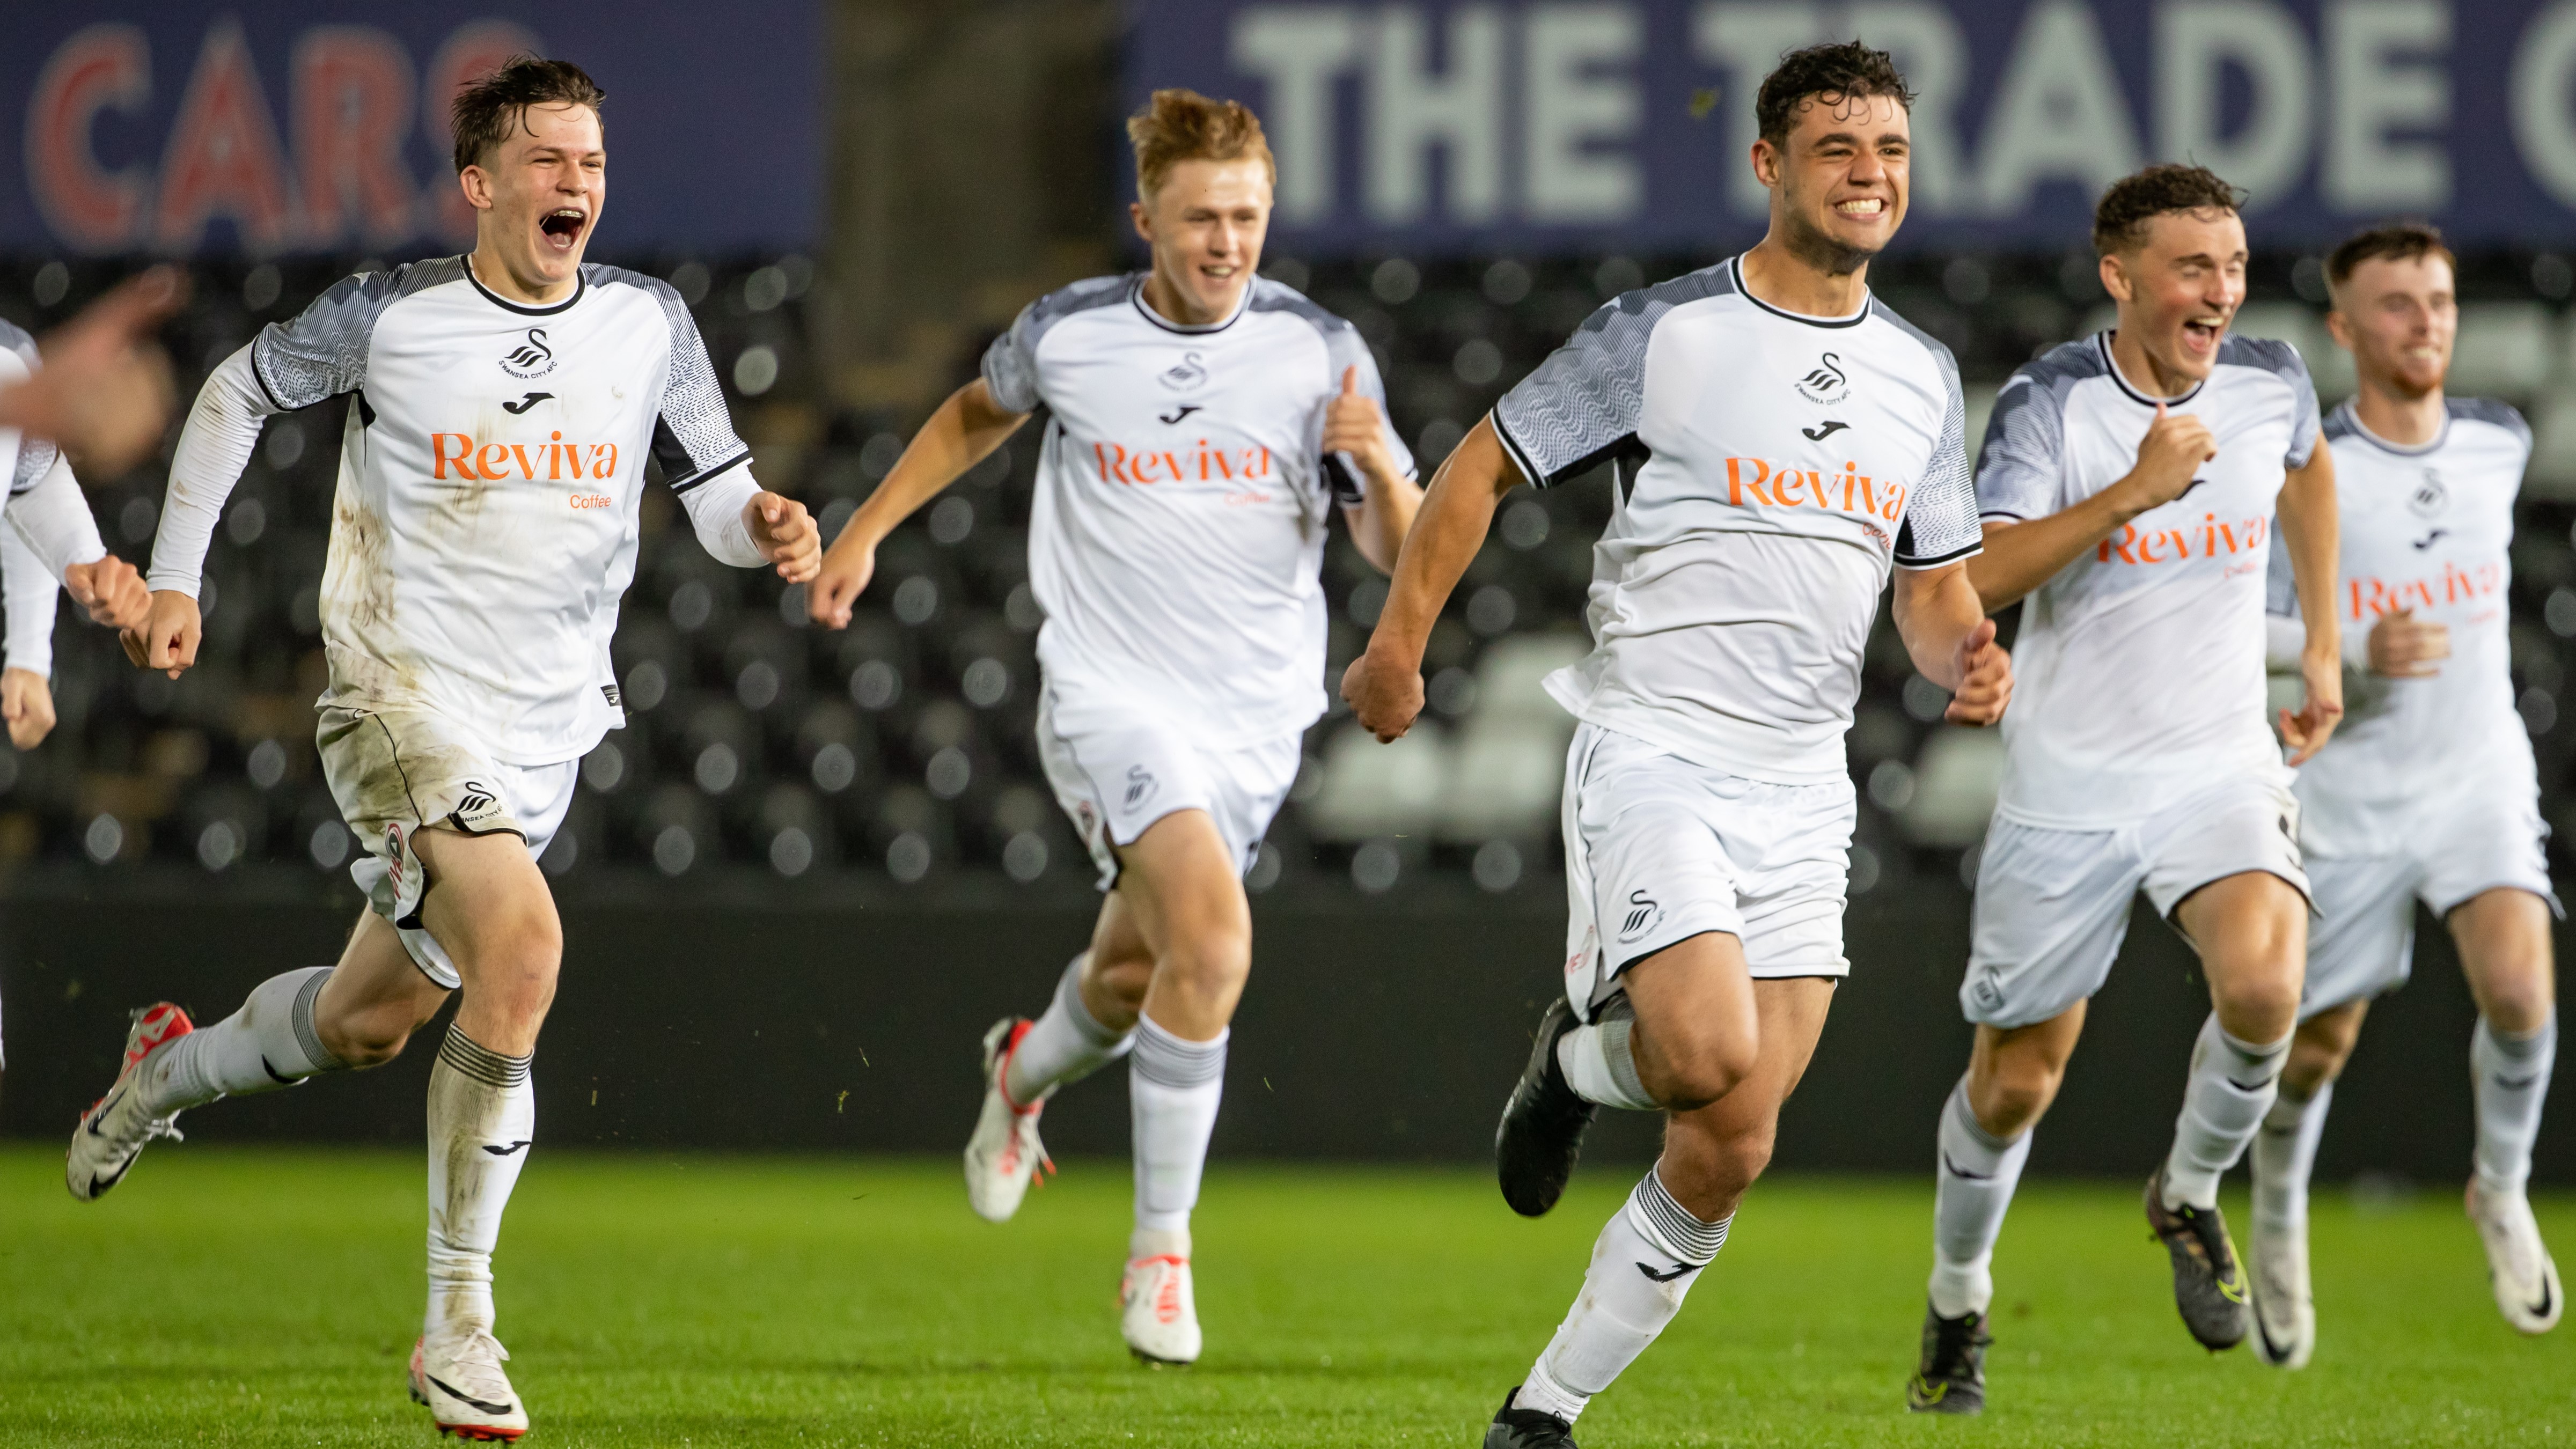 Report, Swansea City Under-21s 1 Cardiff City Under-21s 1 (5-3 penalties)